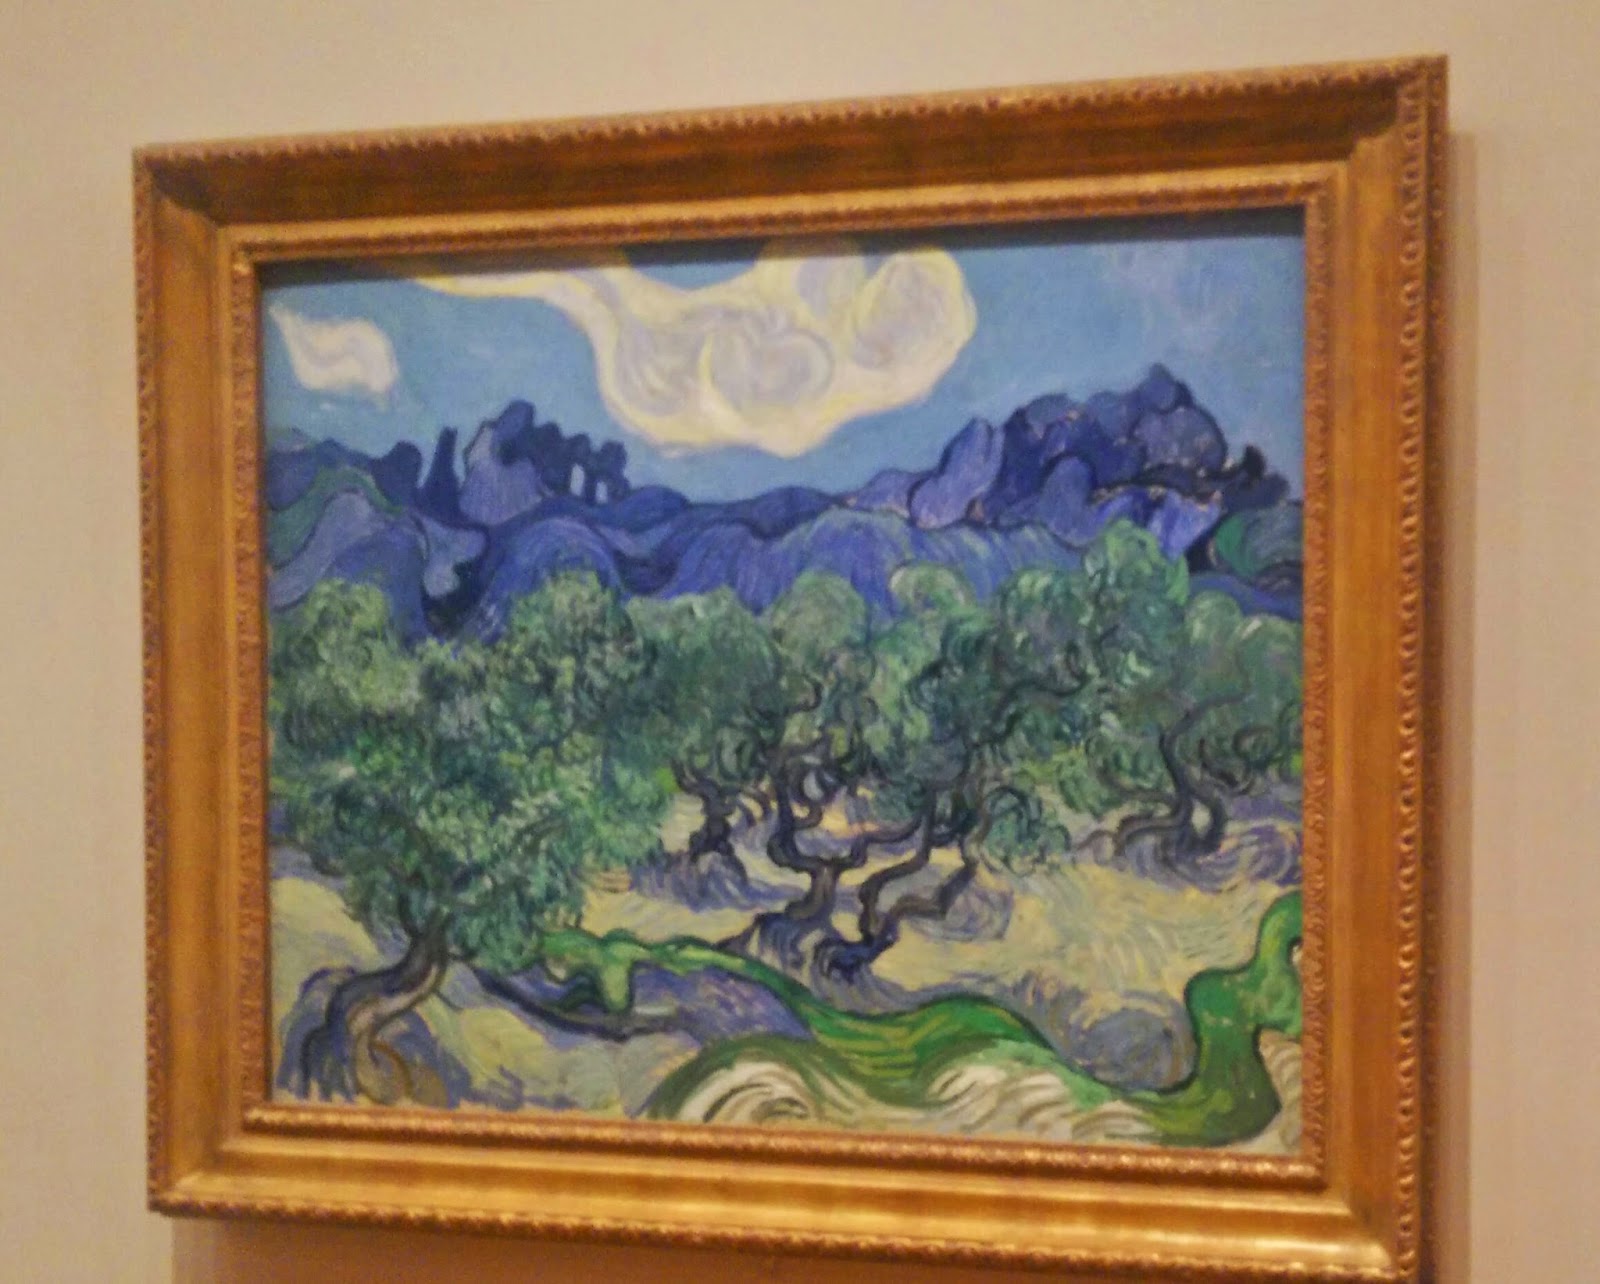 zhang,xinxu: ”Landscape Trees“ by Vincent Van Gogh's